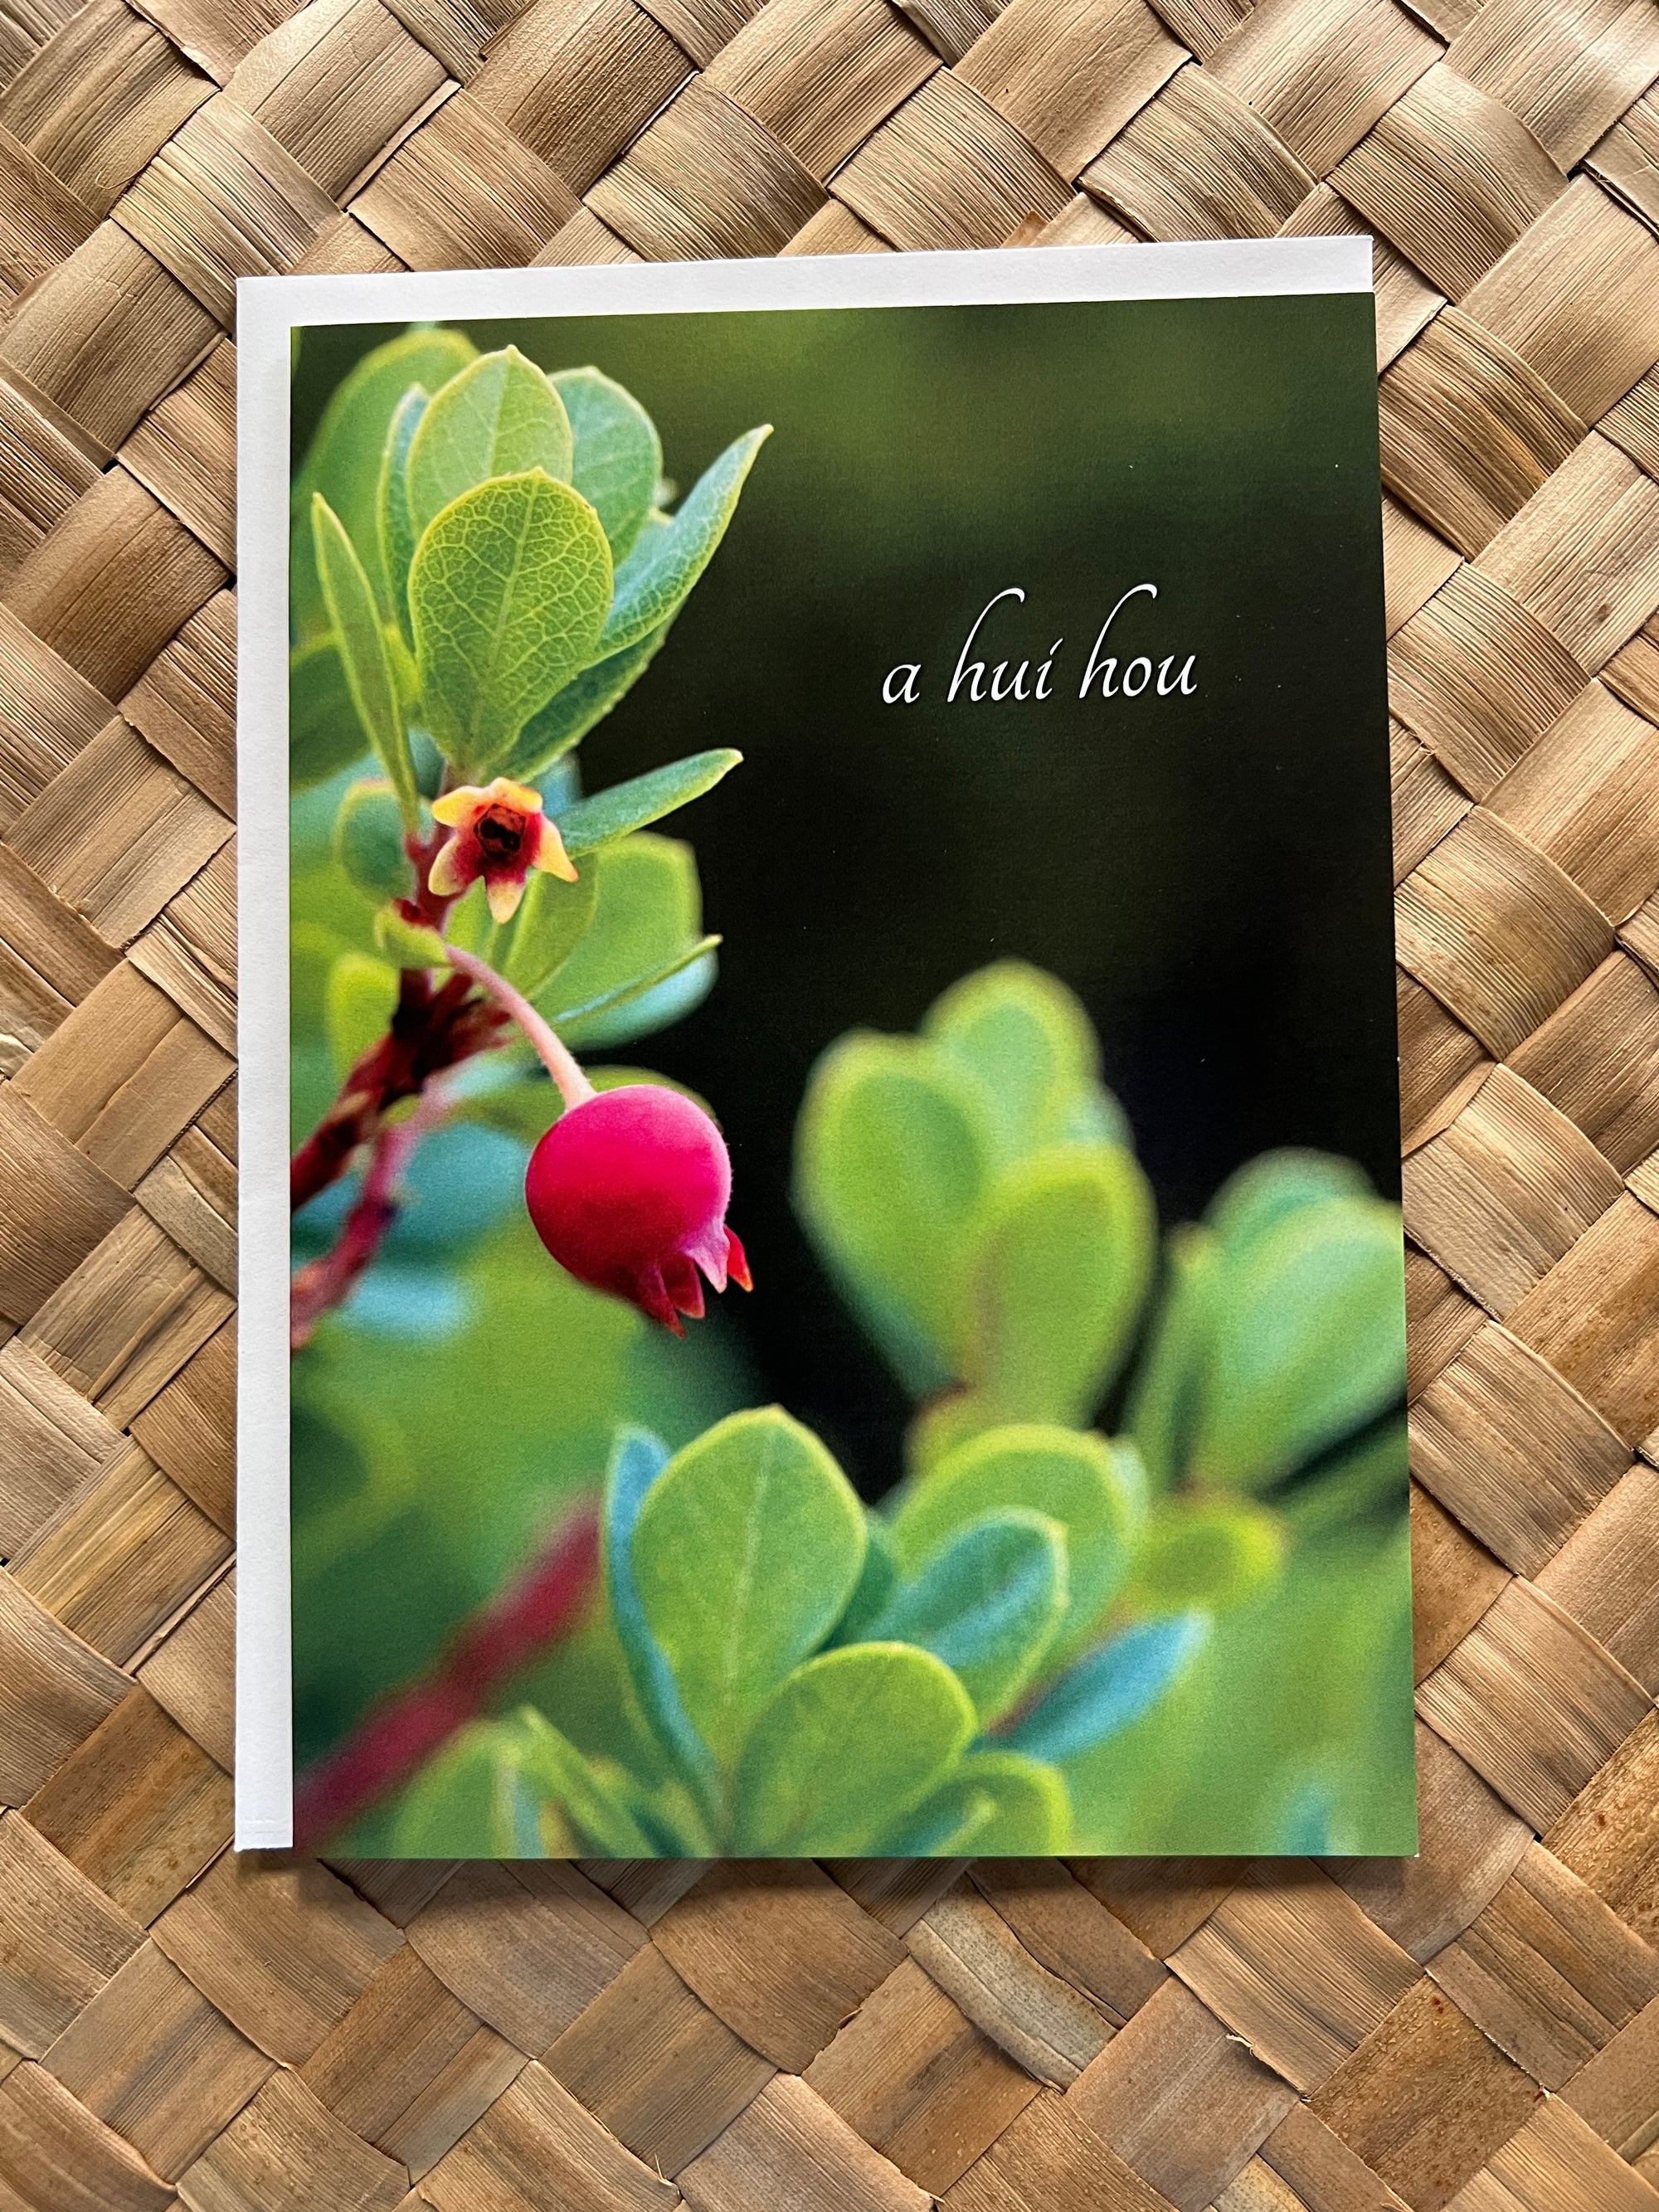 Pop-Up Mākeke - Alohi Images Maui - “A hui hou” (Until We Meet Again) Blank Greeting Card - With Envelope